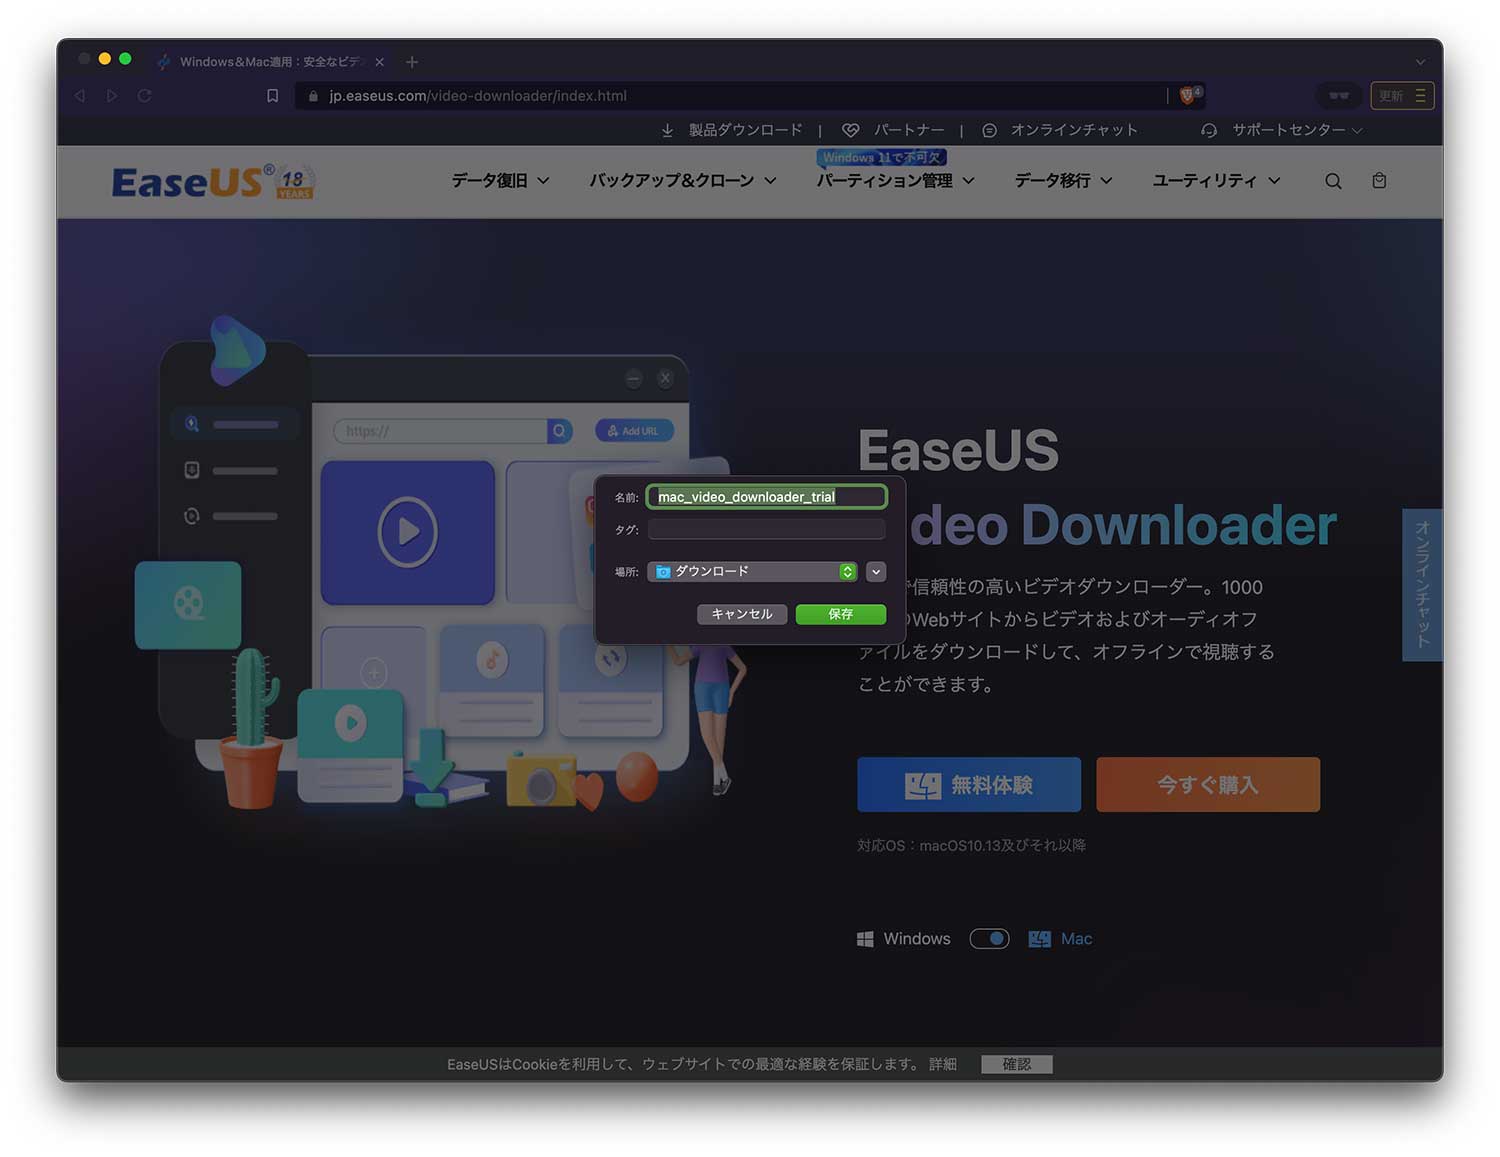 EaseUS Video Downloaderダウンロード方法